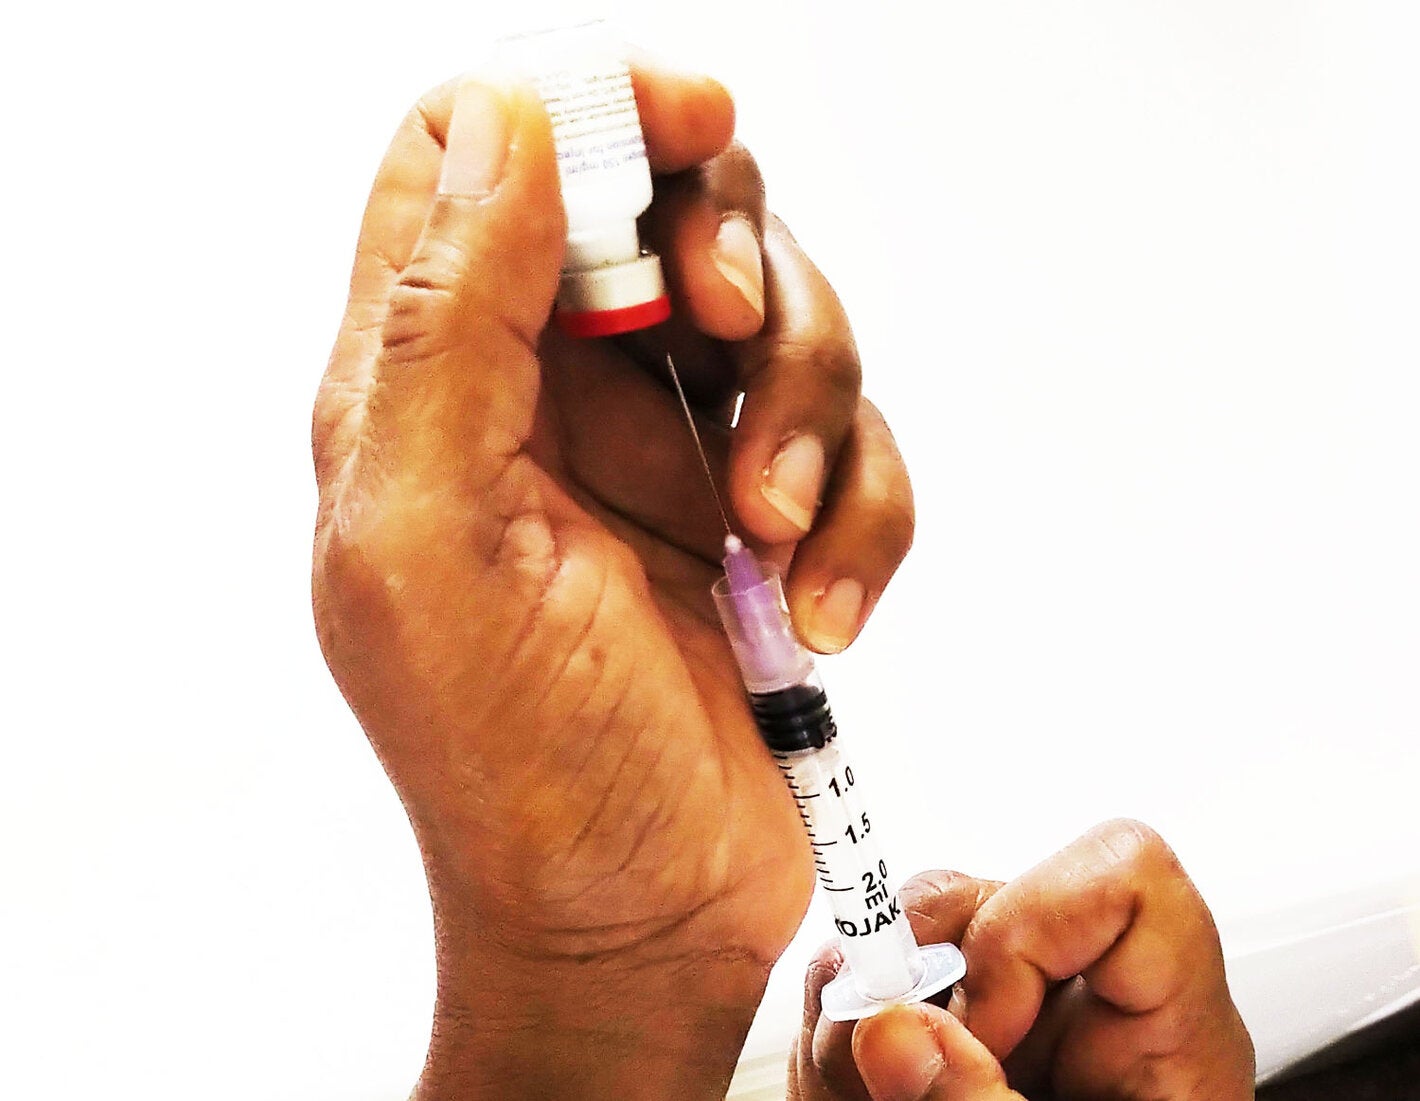 vaccine vial